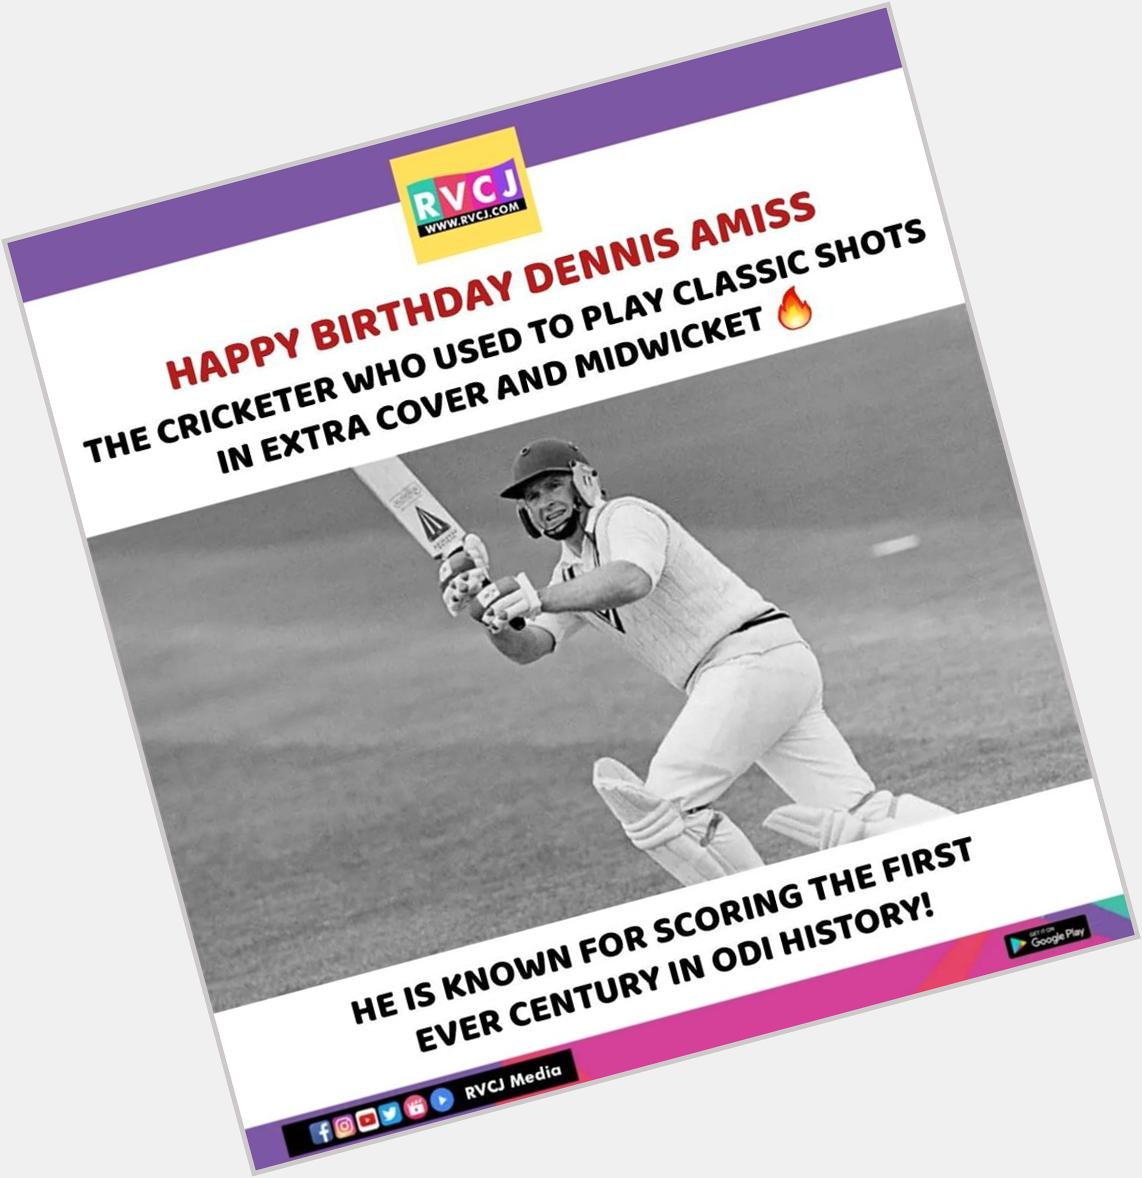 Happy Birthday Dennis Amiss!  